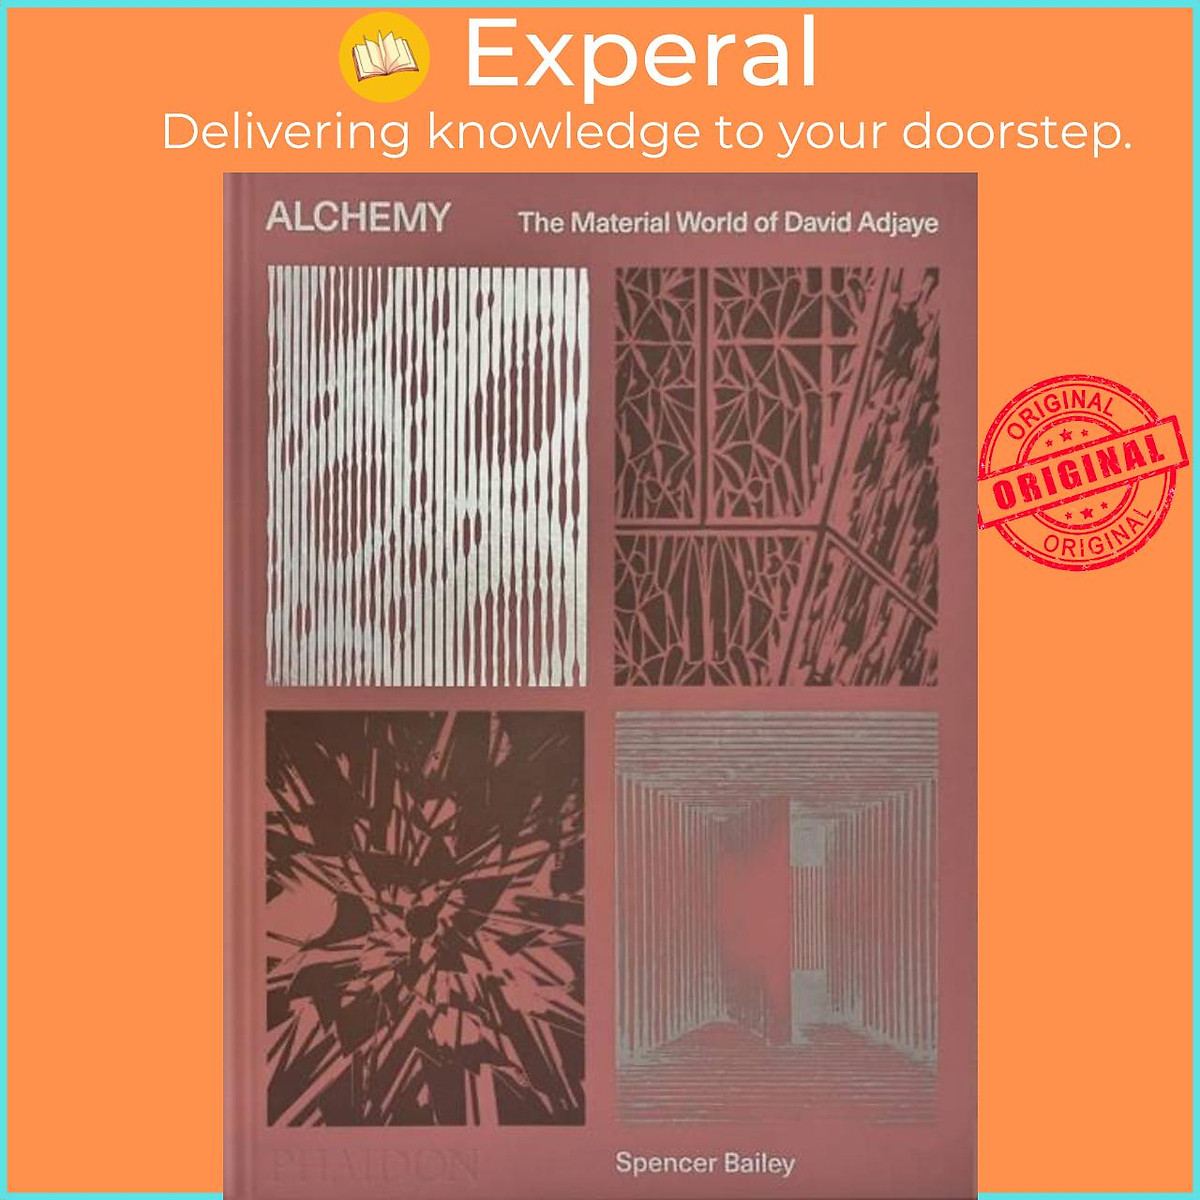 Sách - Alchemy - The Material World of David Adjaye by Spencer Bailey (UK edition, hardcover)